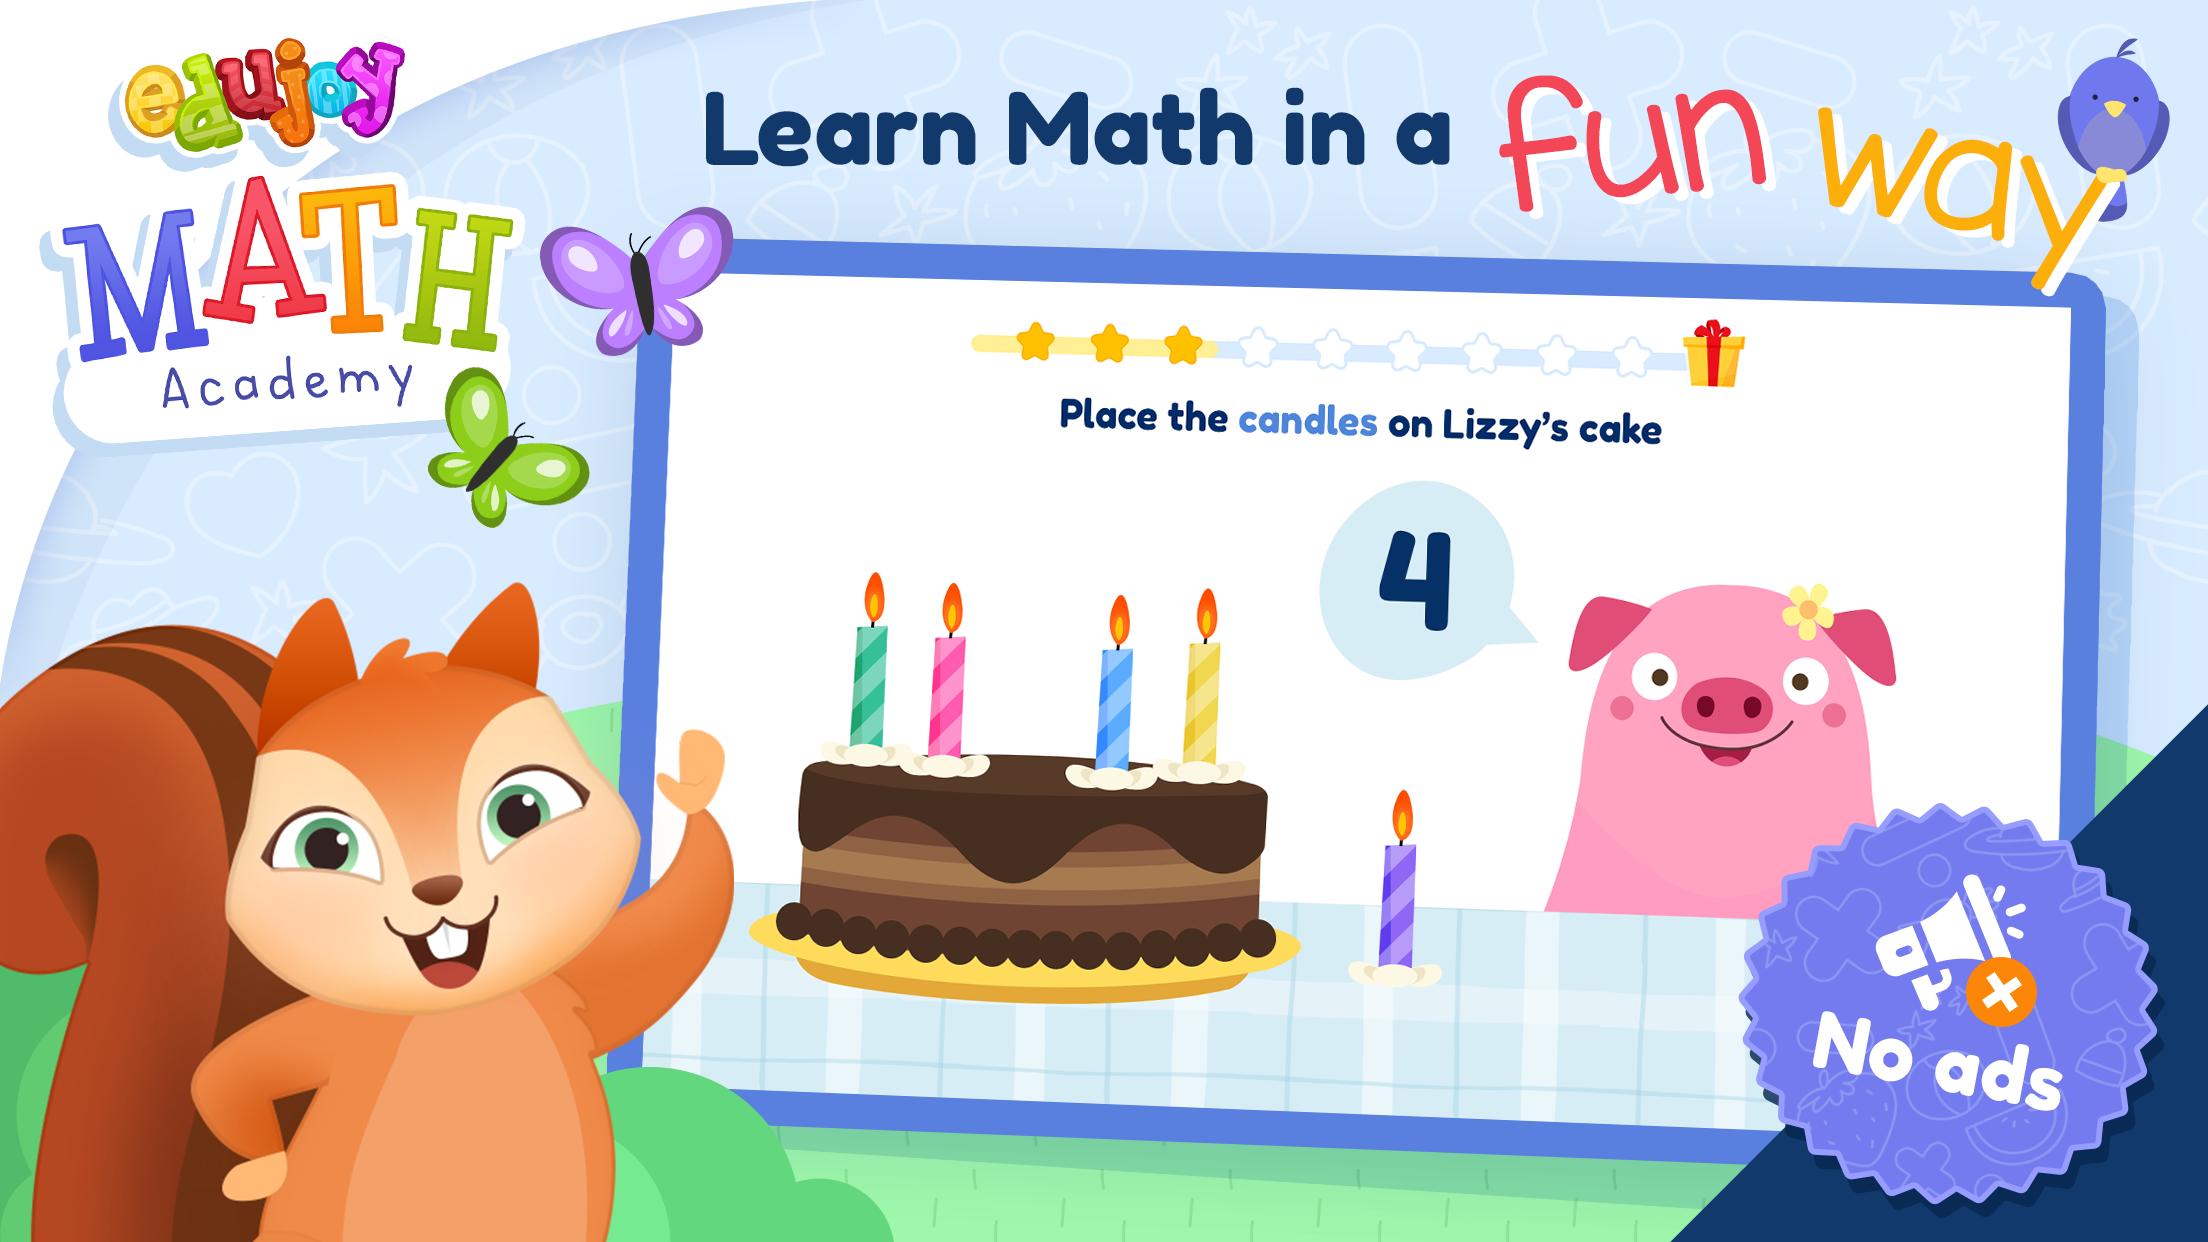 Edujoy Math Academy - Learn Maths 7.8 Screenshot 7